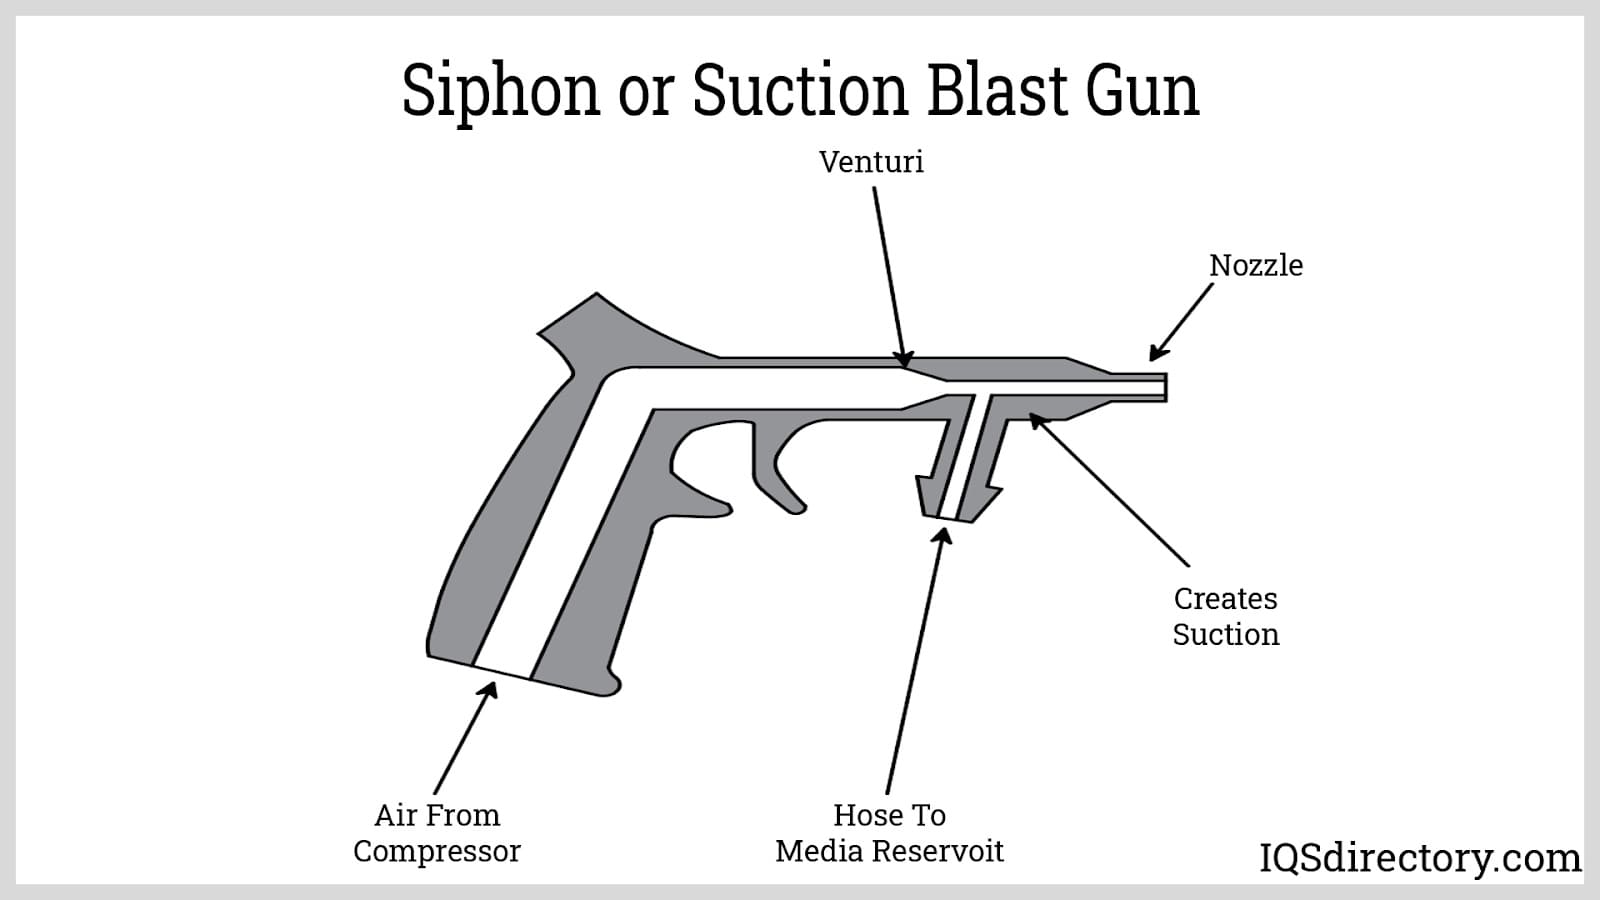 Siphon or Suction Blast Gun